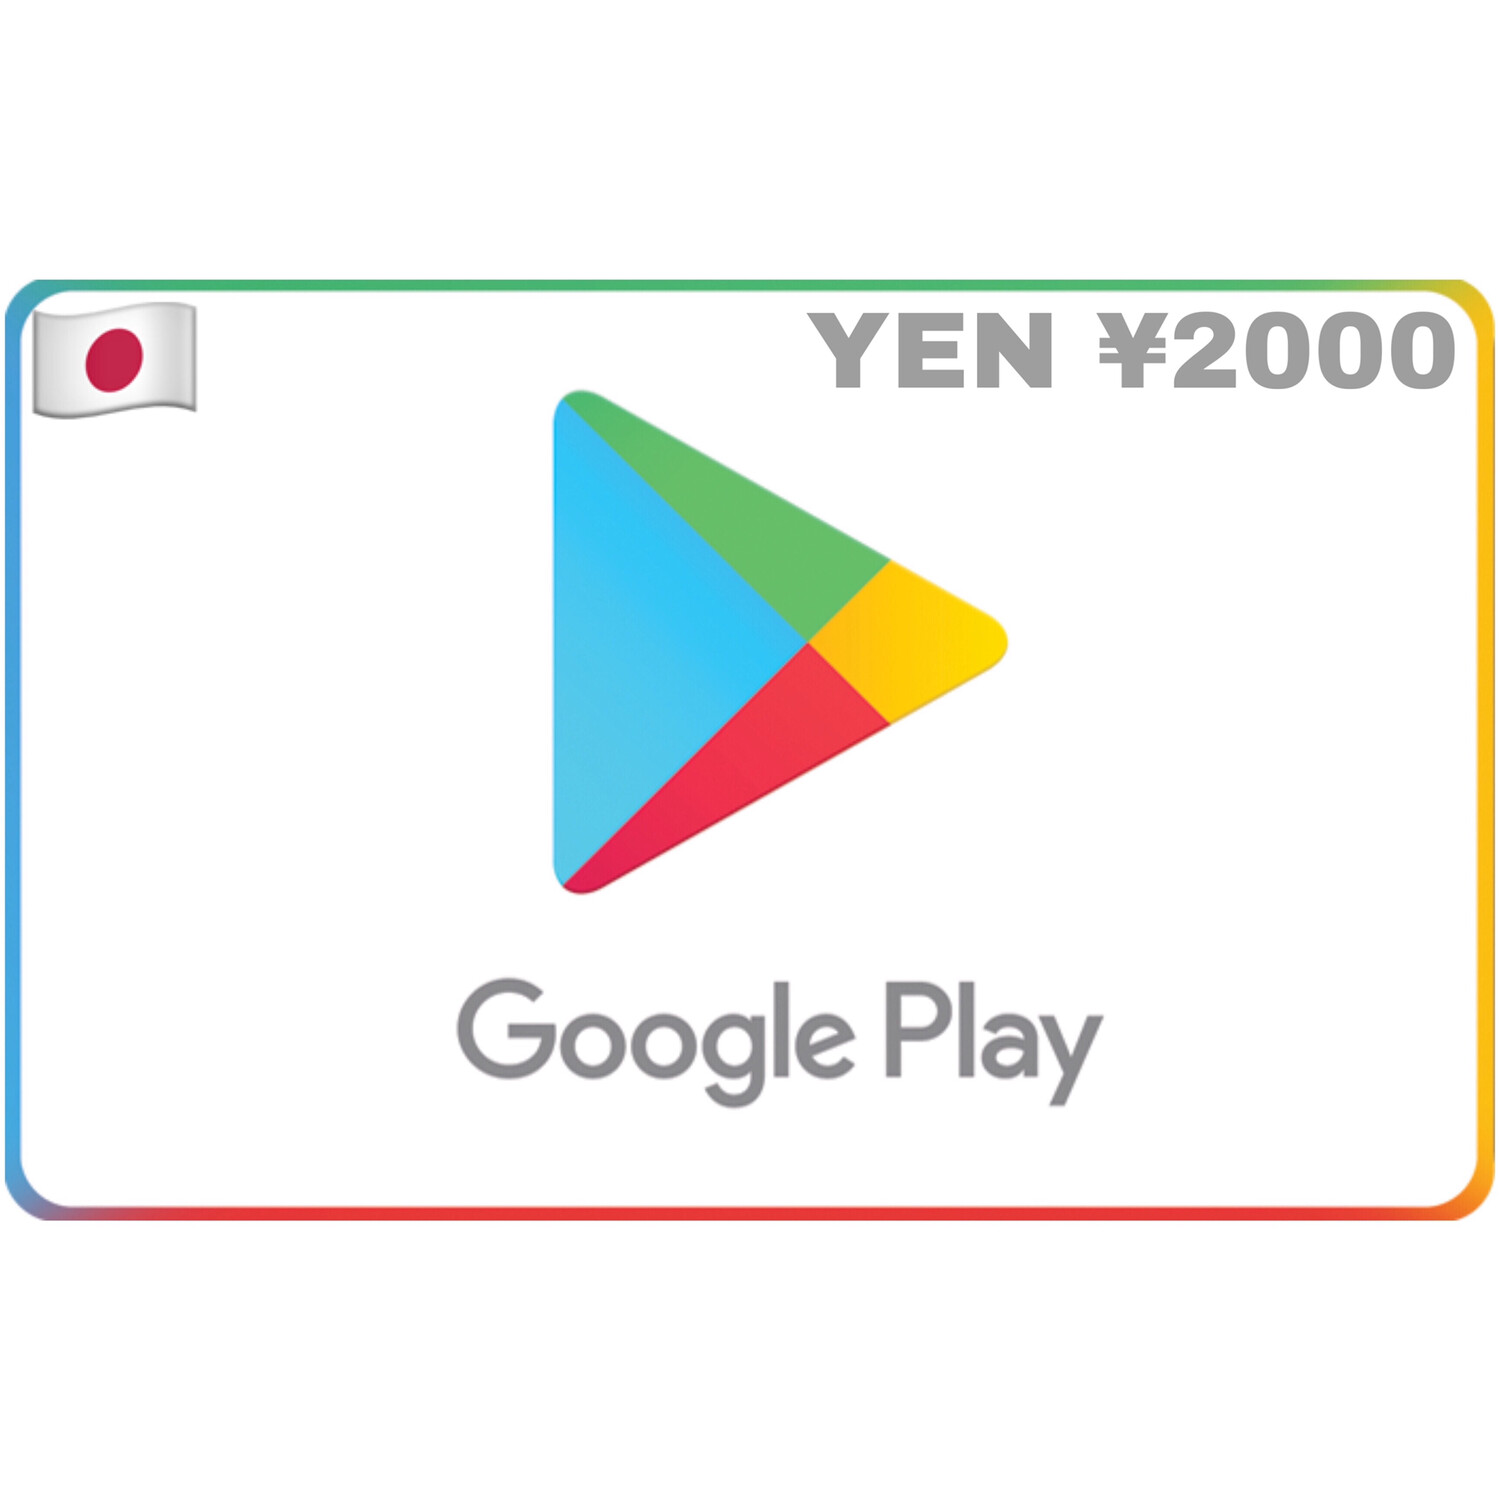 Google Play Japan ¥2000 YEN